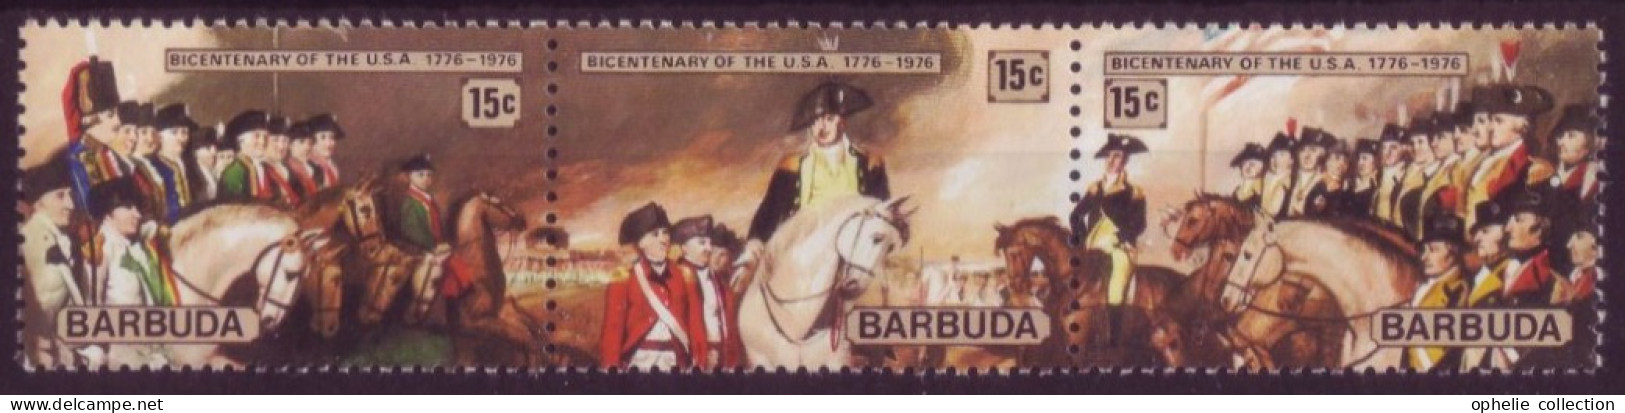 Amérique - Barbuda - Bandeau Bicentenary Of The USA  1776-1976  - 7334 - Sonstige - Amerika